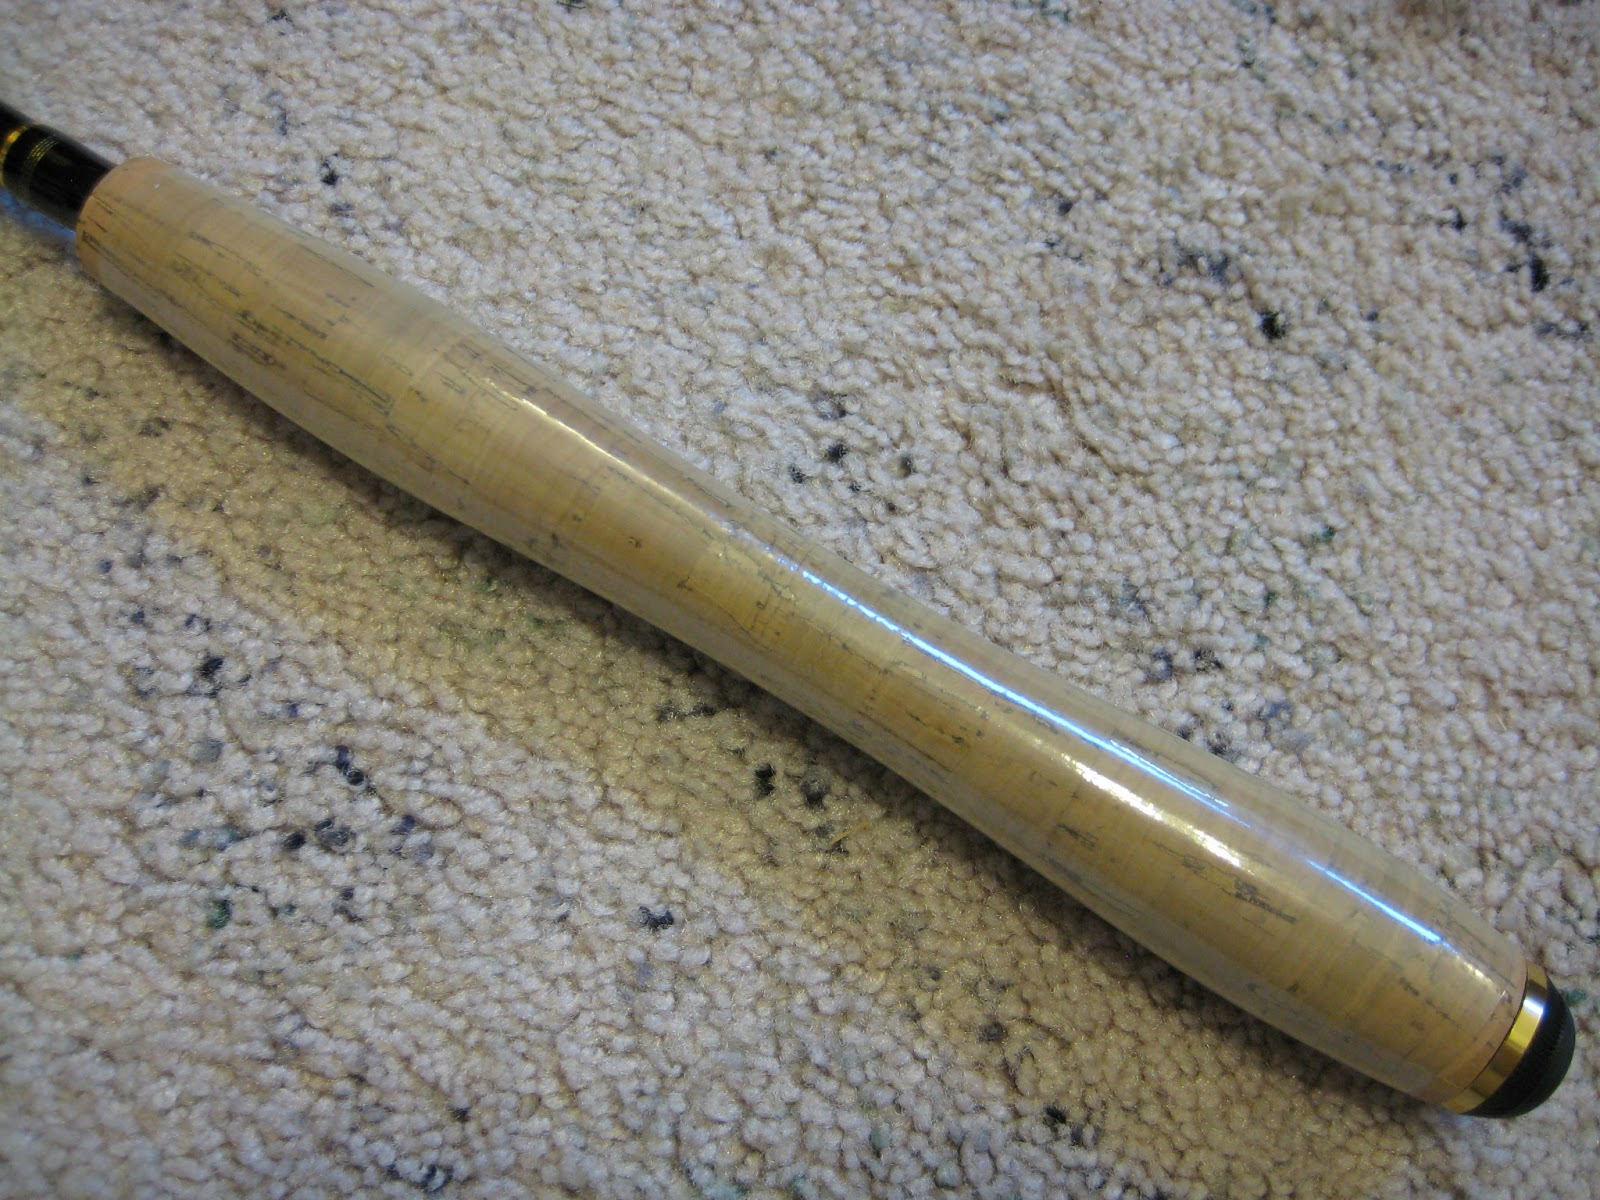 Tenkara Rod Grip Material: Cork, Foam, or Wood?